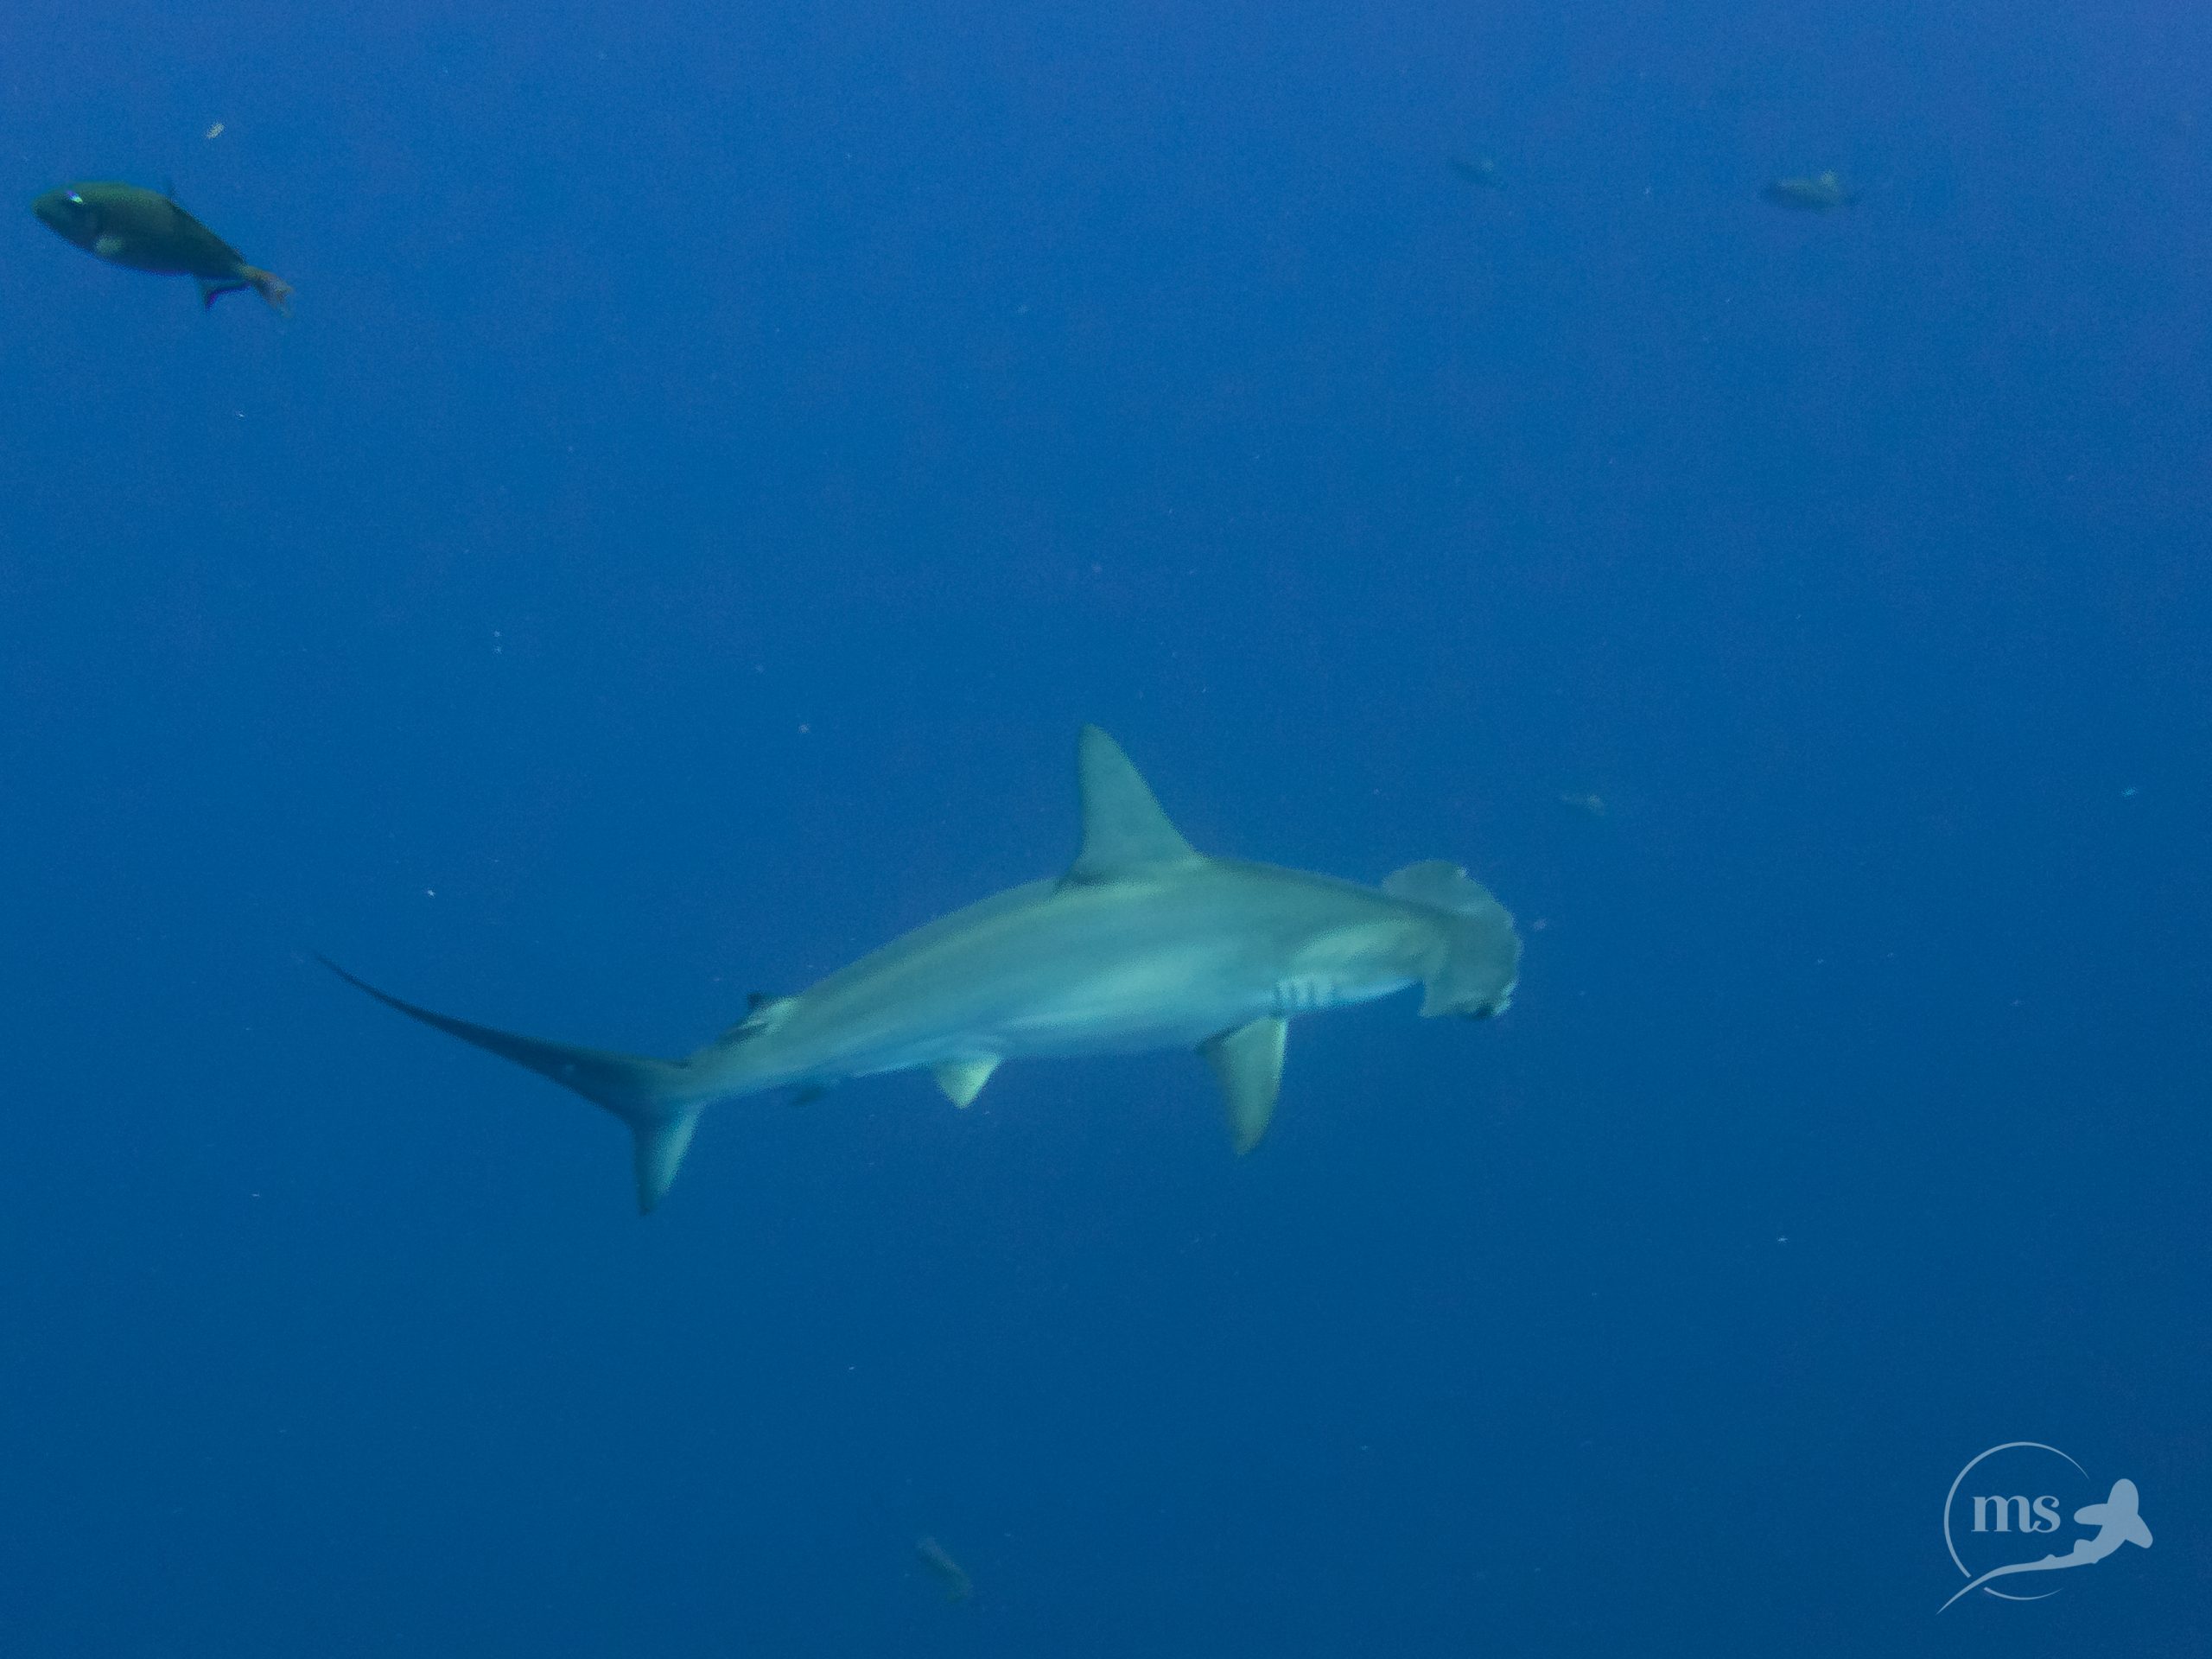 Hammerhead sharks are found in the Baja California Peninsula